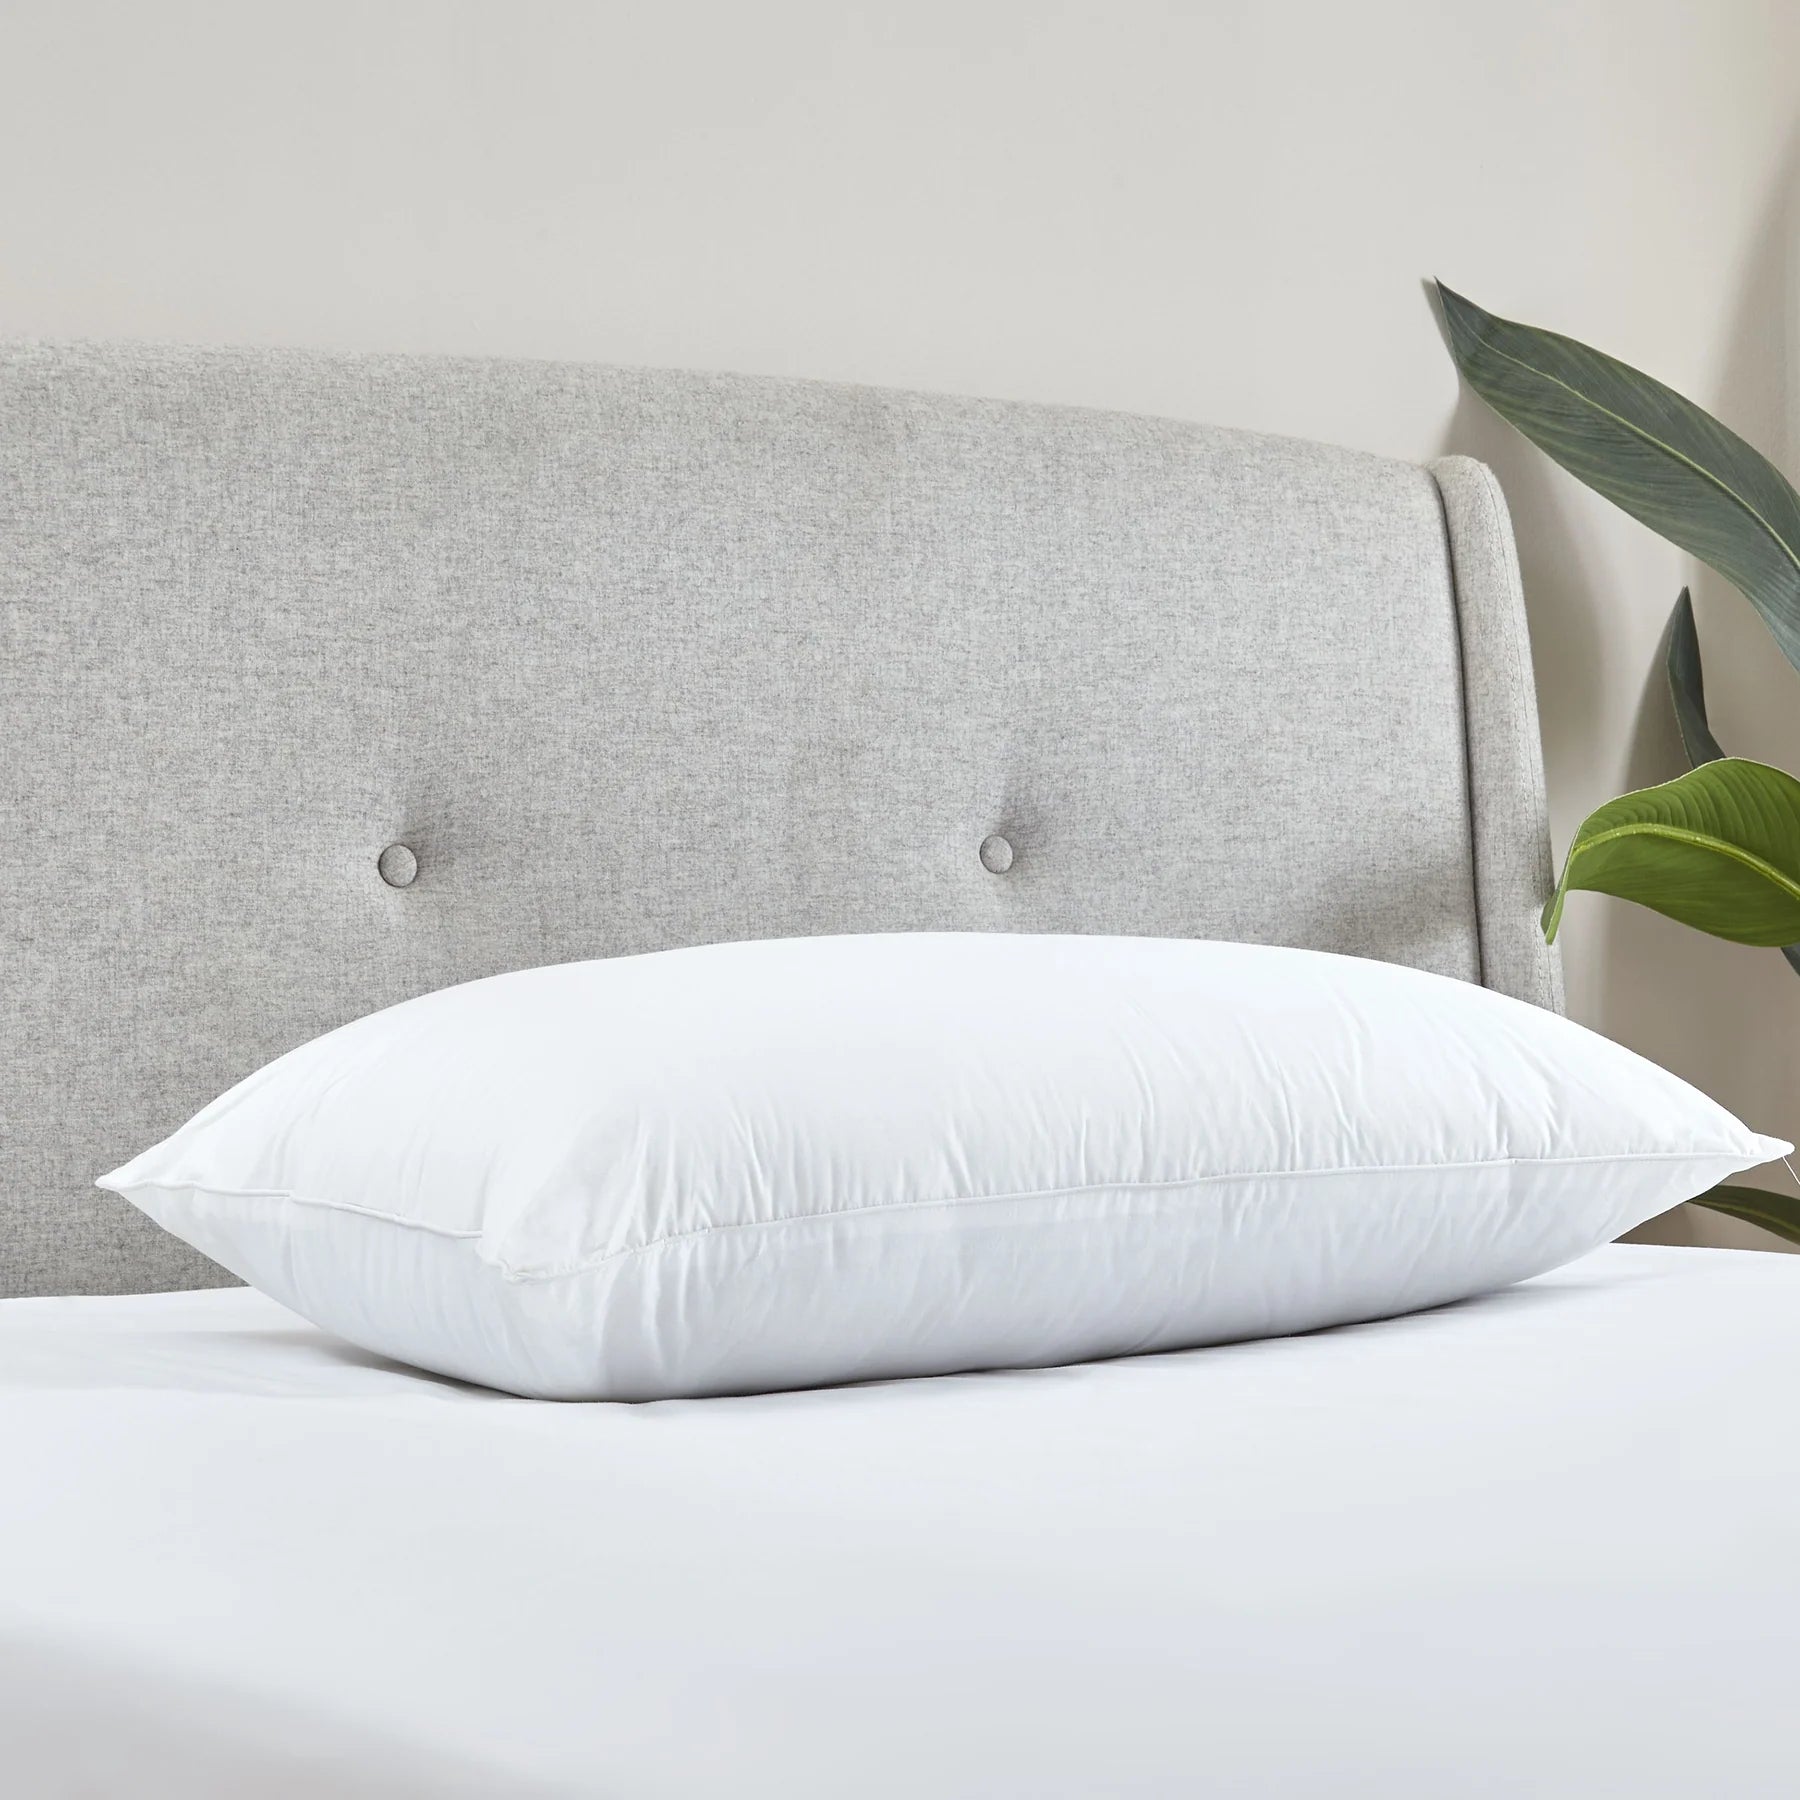 Luxury Multi Relax Pillow 48 x 74cms UK Size